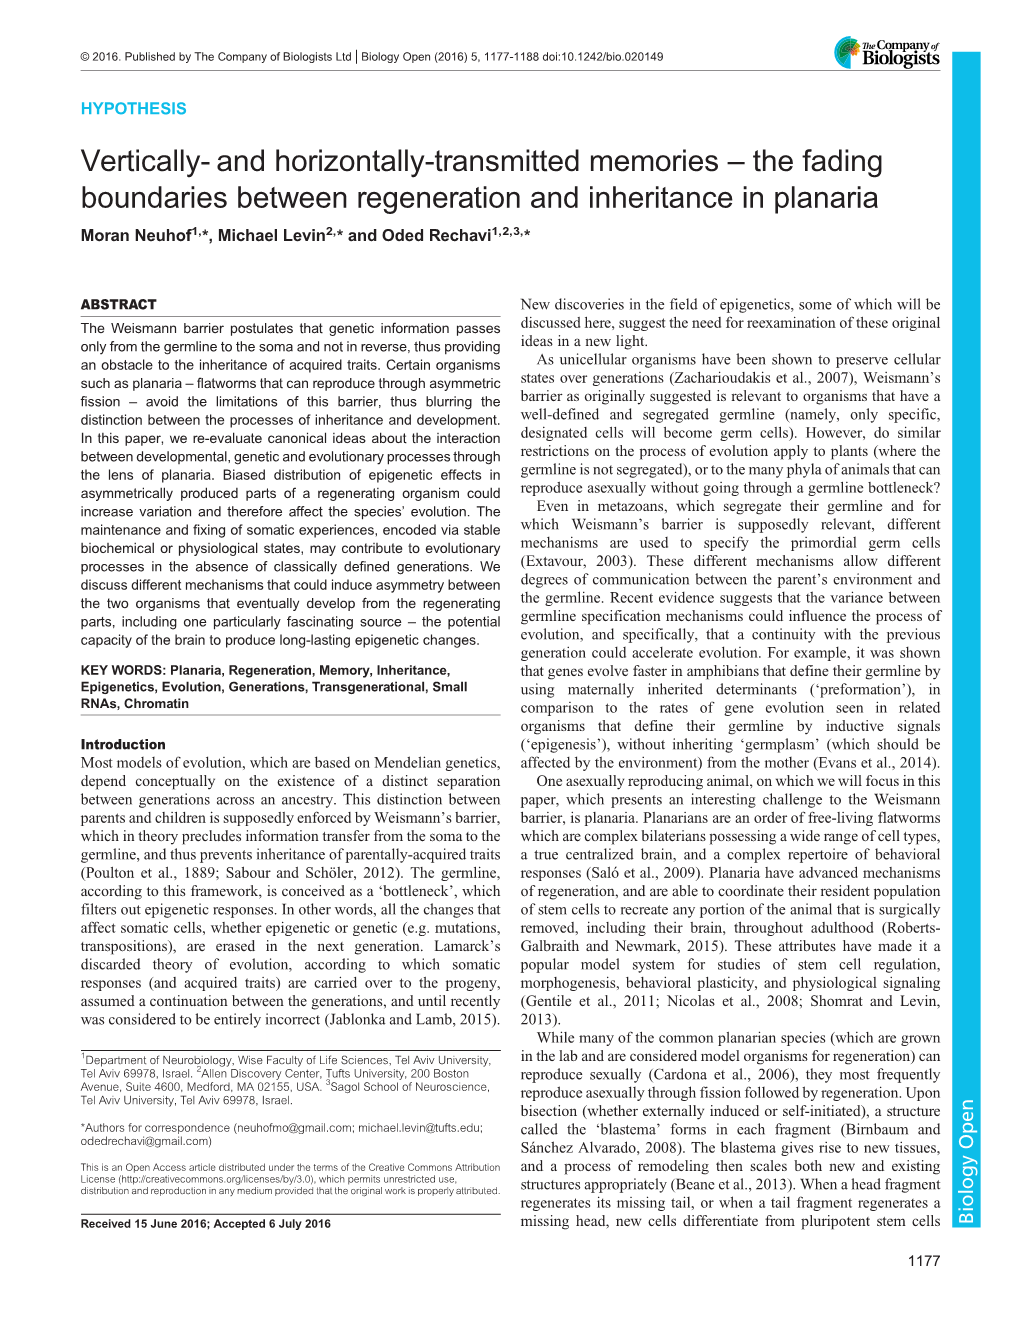 The Fading Boundaries Between Regeneration and Inheritance in Planaria Moran Neuhof1,*, Michael Levin2,* and Oded Rechavi1,2,3,*